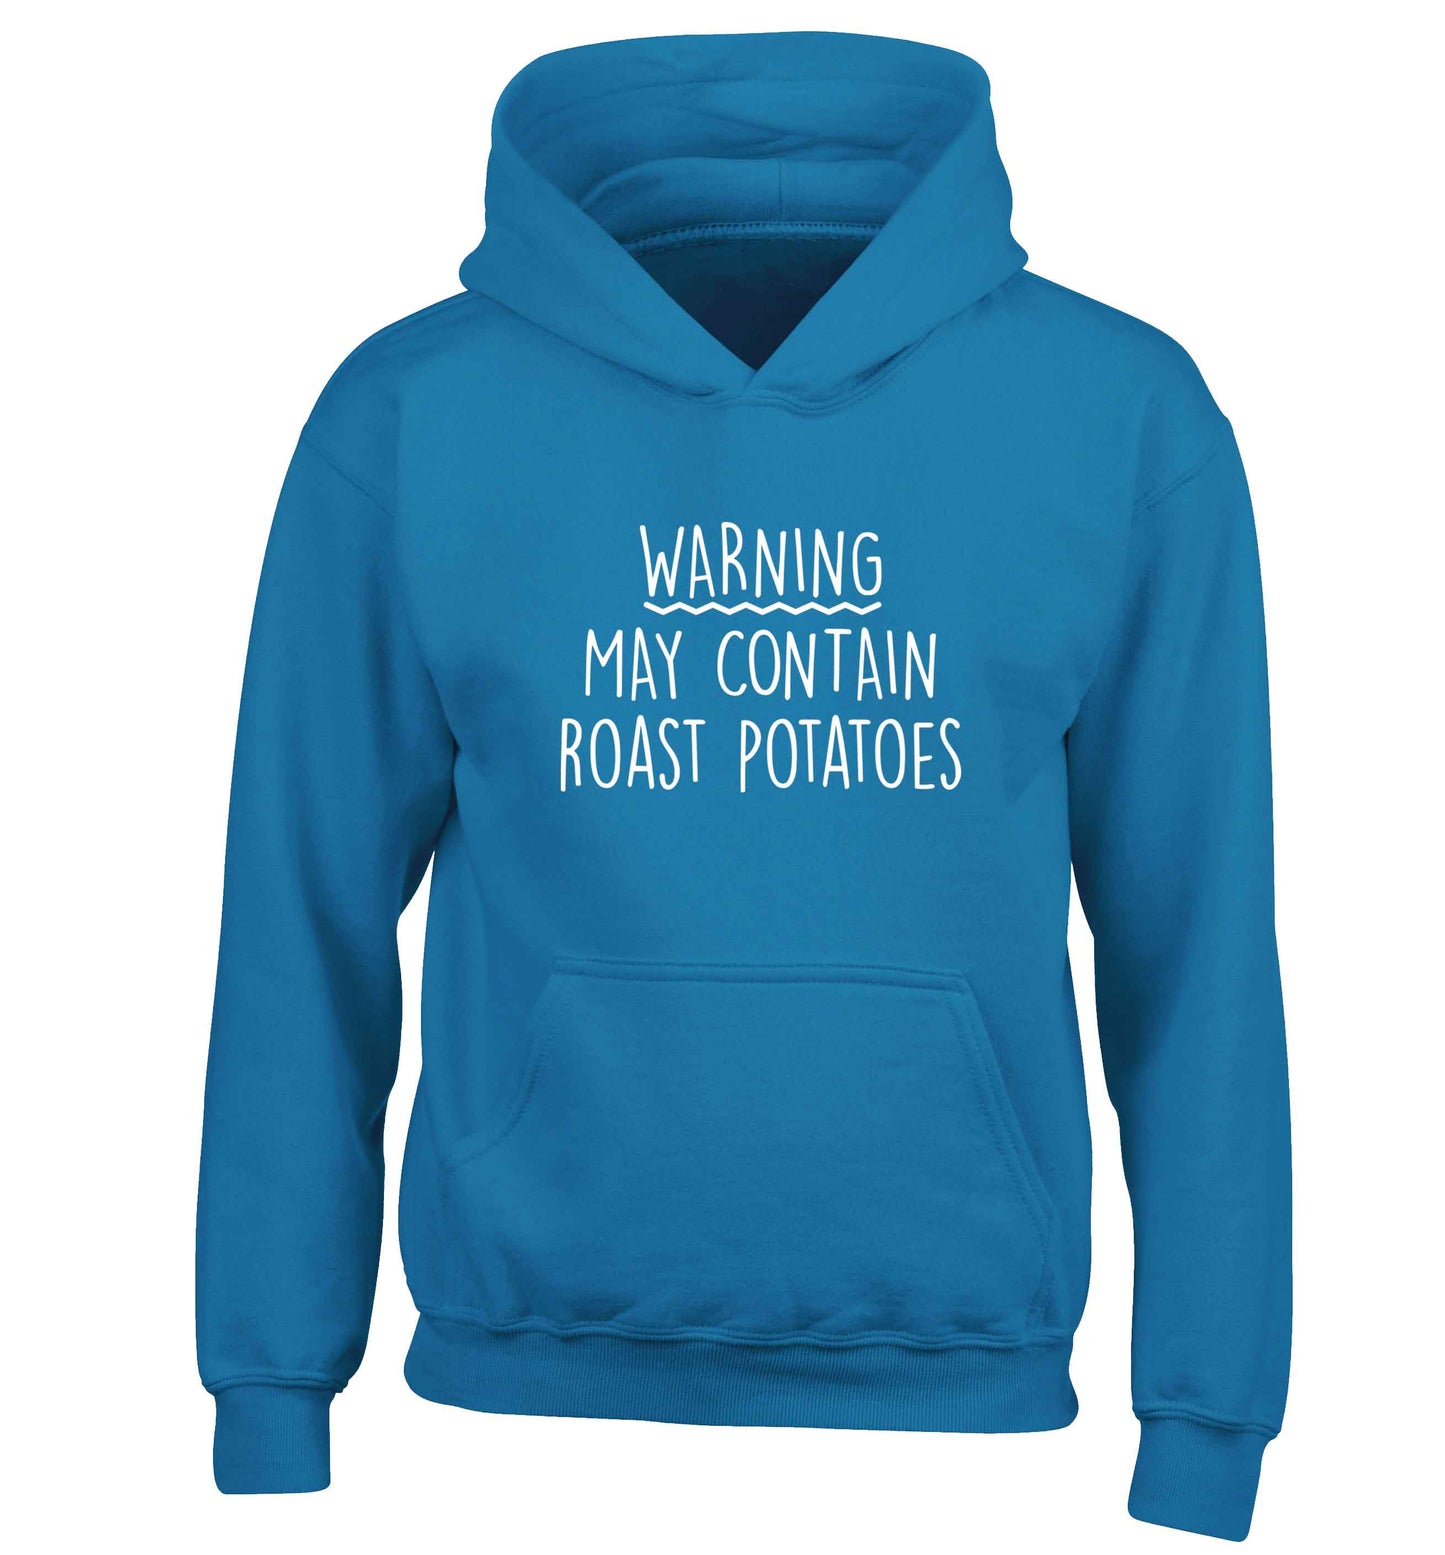 Warning may containg roast potatoes children's blue hoodie 12-13 Years